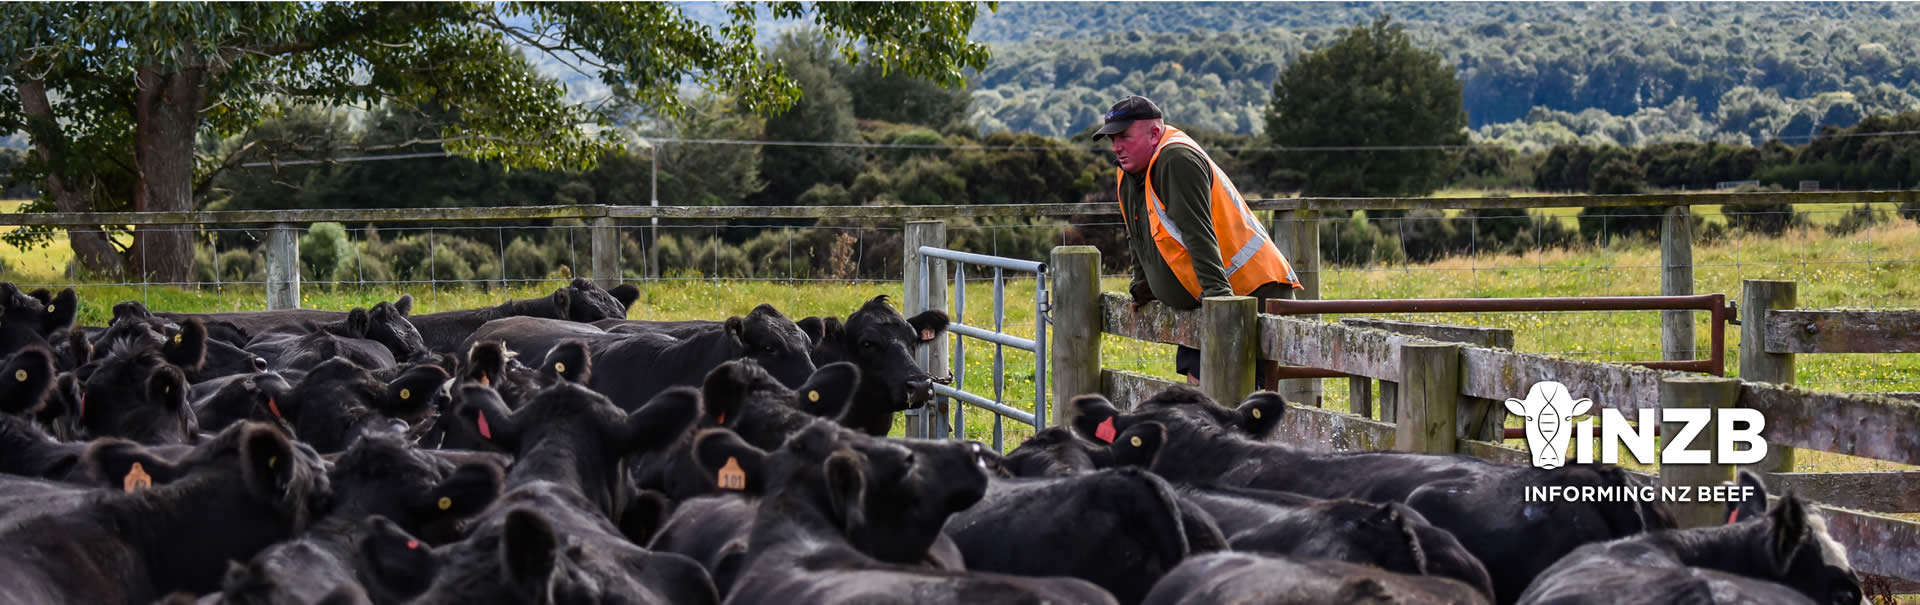 Beef farm New Zealand